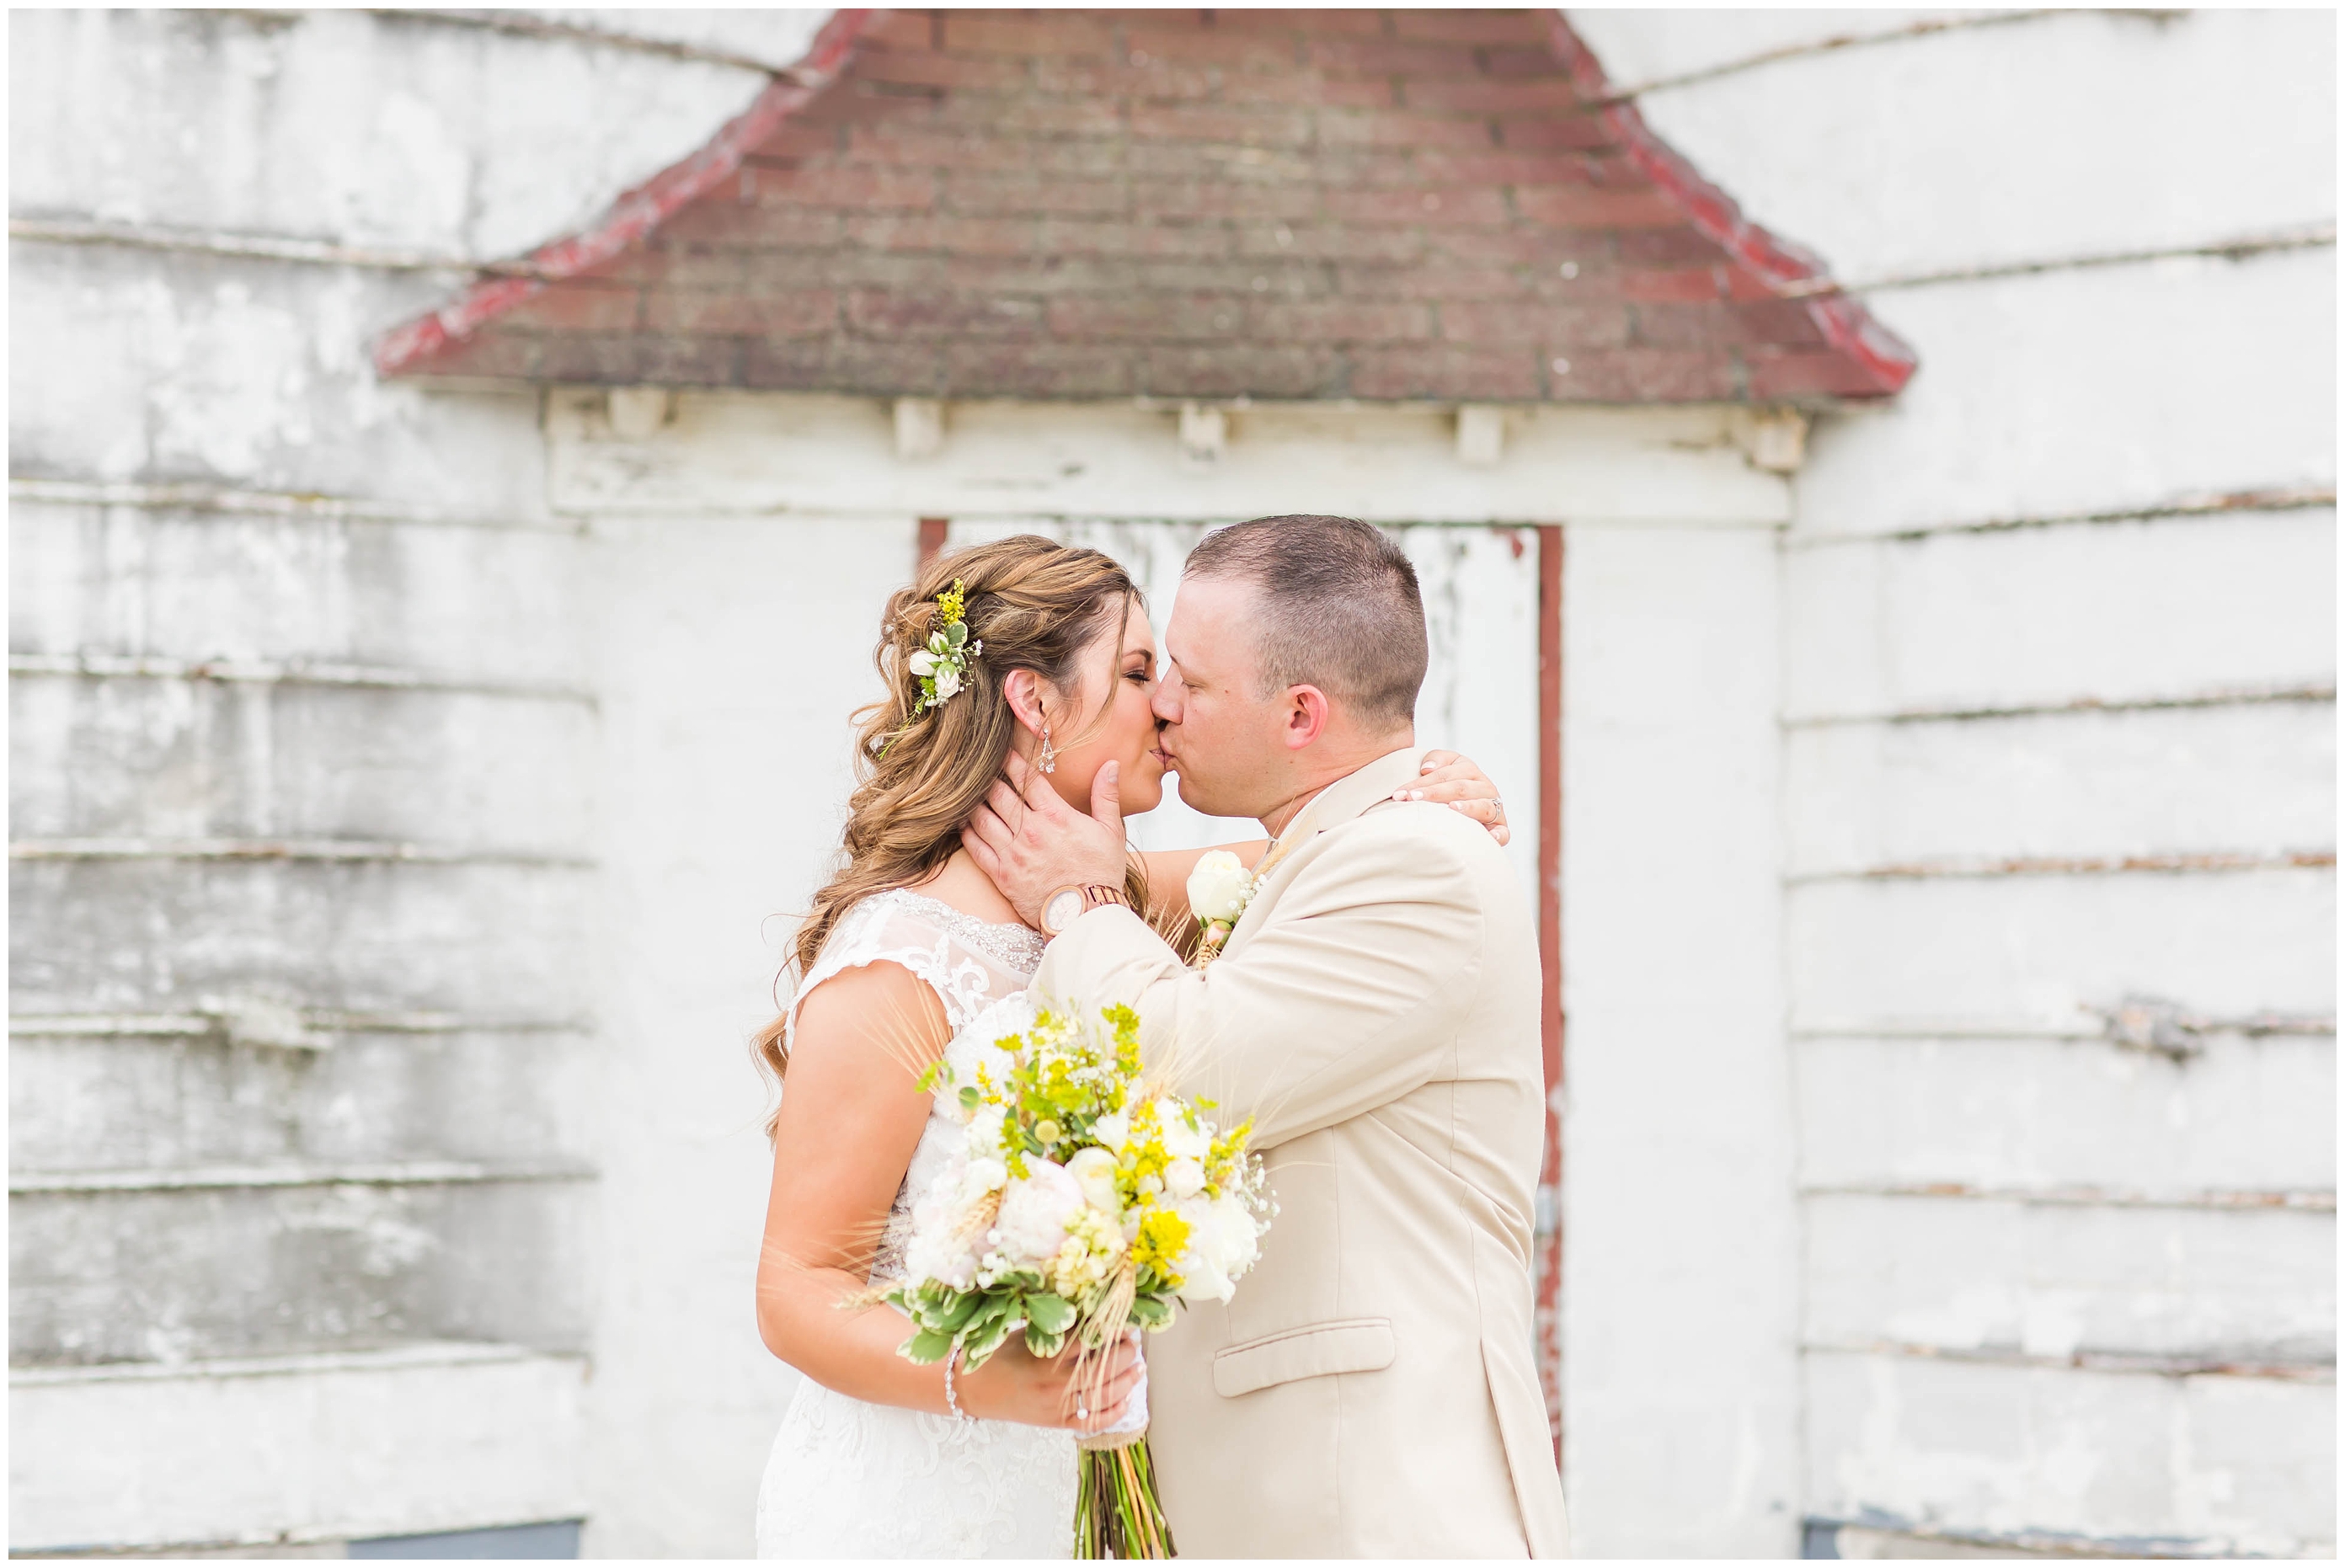 Beautiful Bouquet with roses,Brookside Farm Wedding,Summer Wedding,and babybreath,peonies,photographer akron ohio,rustic barn wedding,